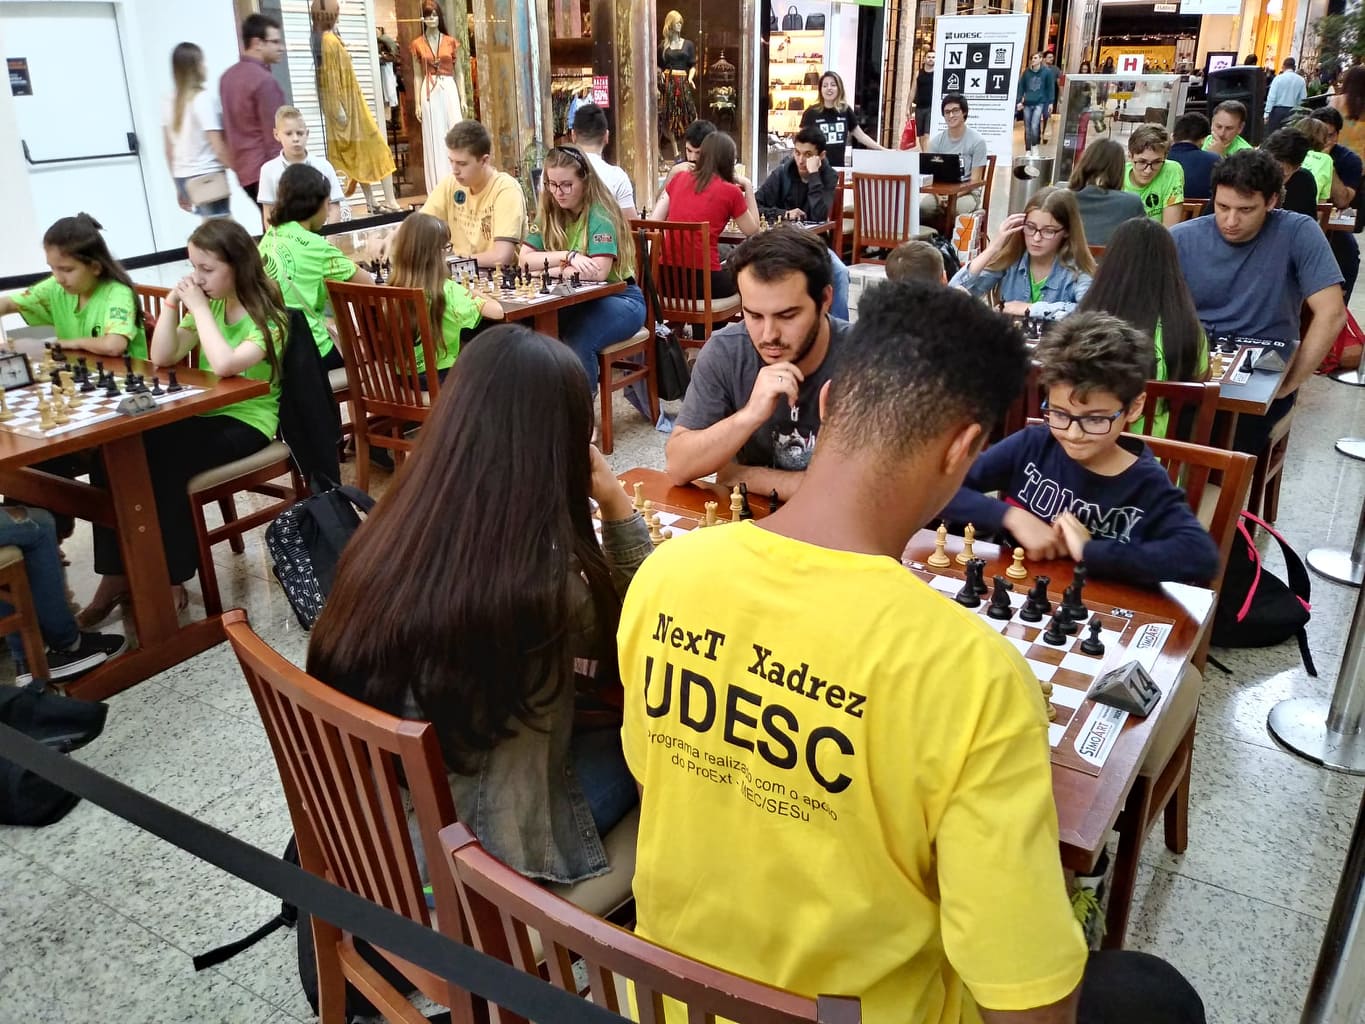 Notícia - Núcleo de Xadrez da Udesc Joinville realiza campeonatos